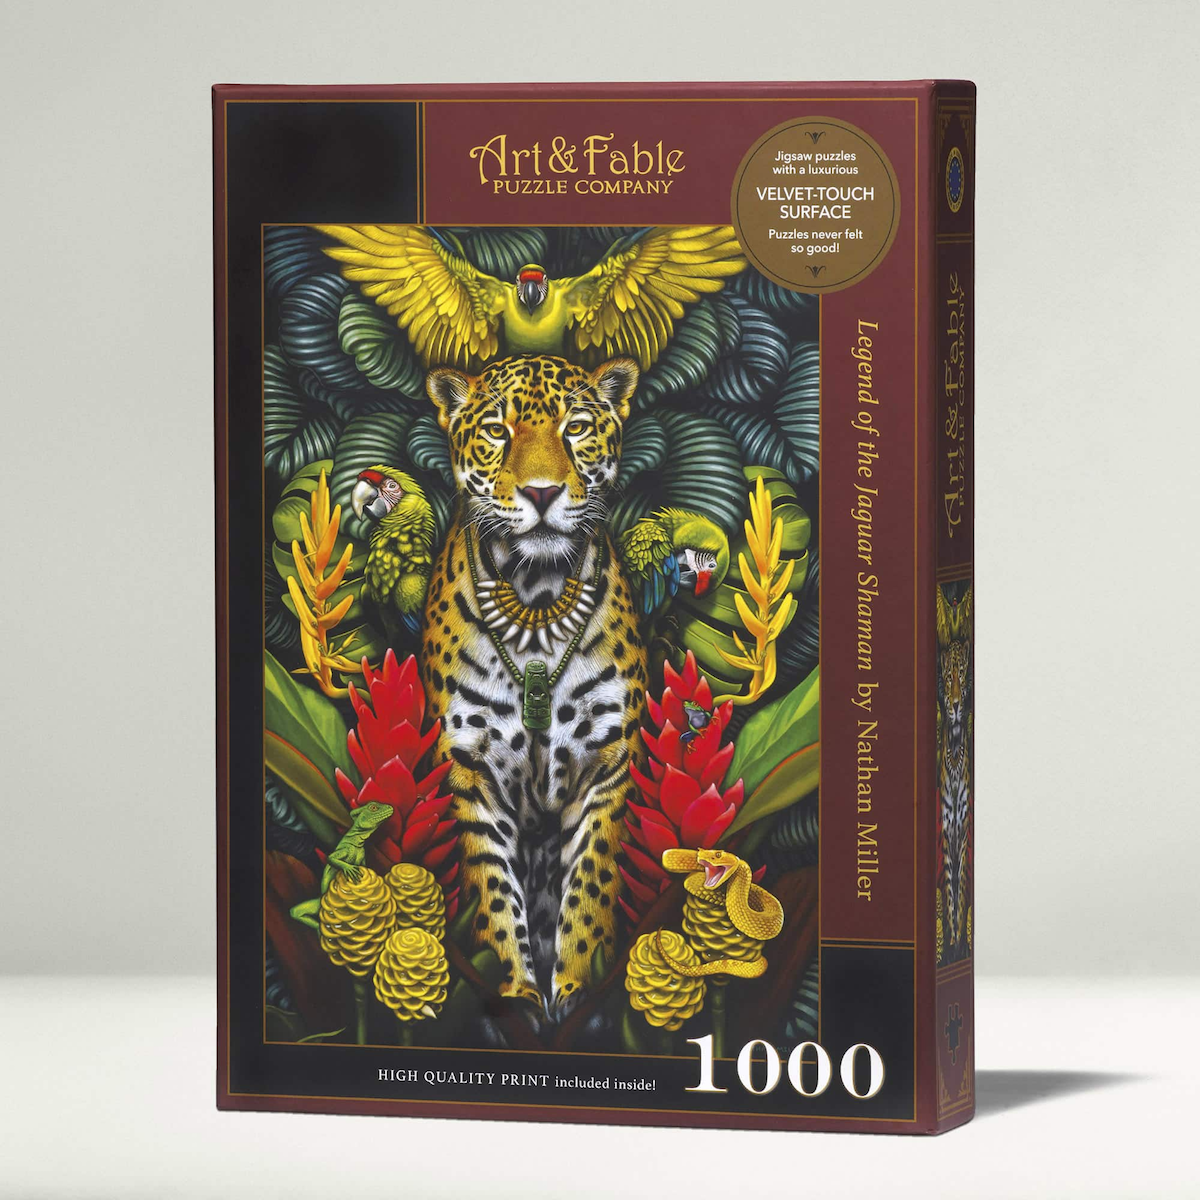 Legend of the Jaguar Shaman, 1000 piece Puzzle - Heart of the Home PA